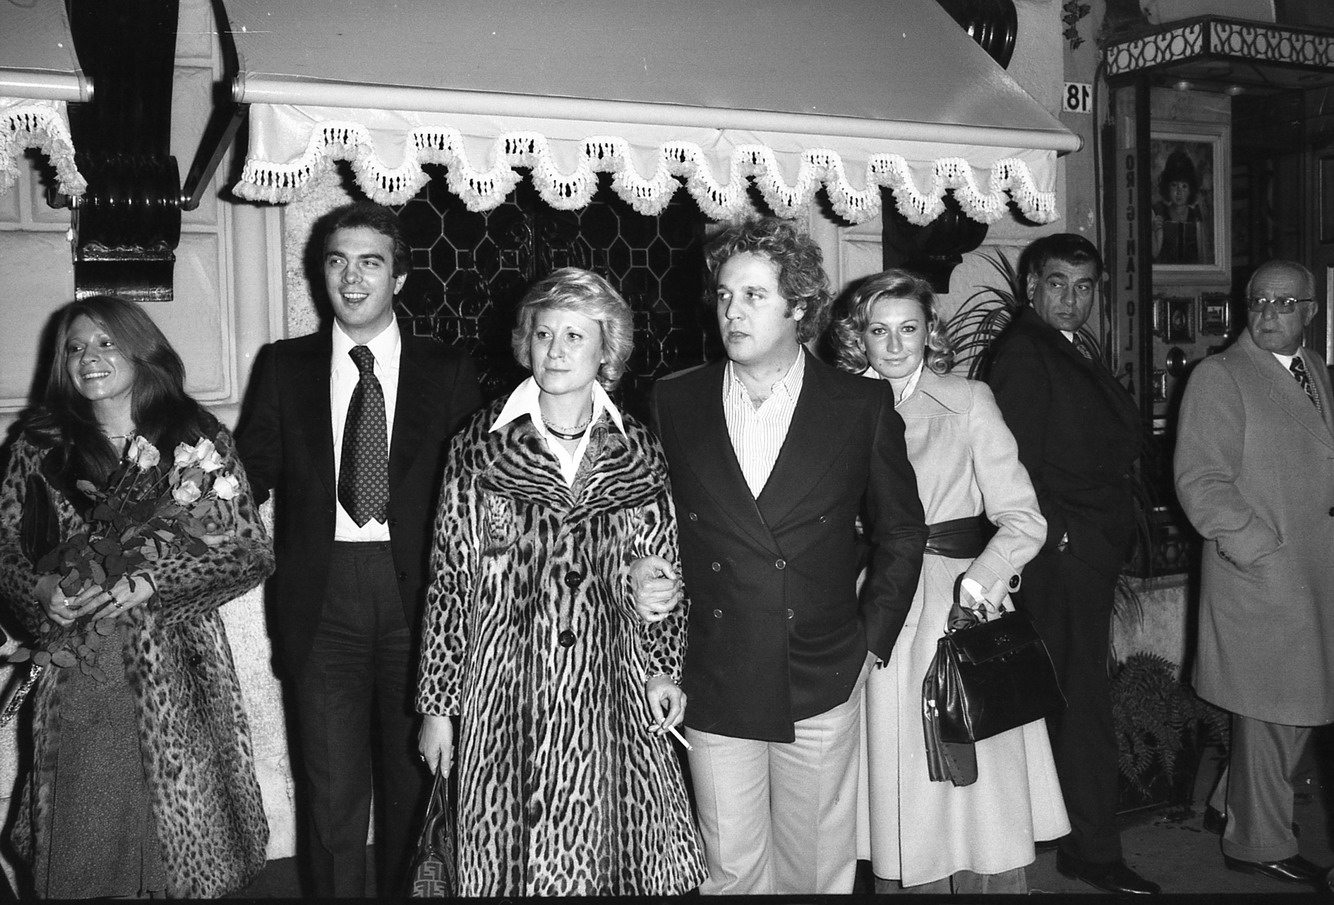 Renato Pozzetto with his wife and friends at the Sans Souci restaurant in via Sicilia in Rome on 09 November 1974. 